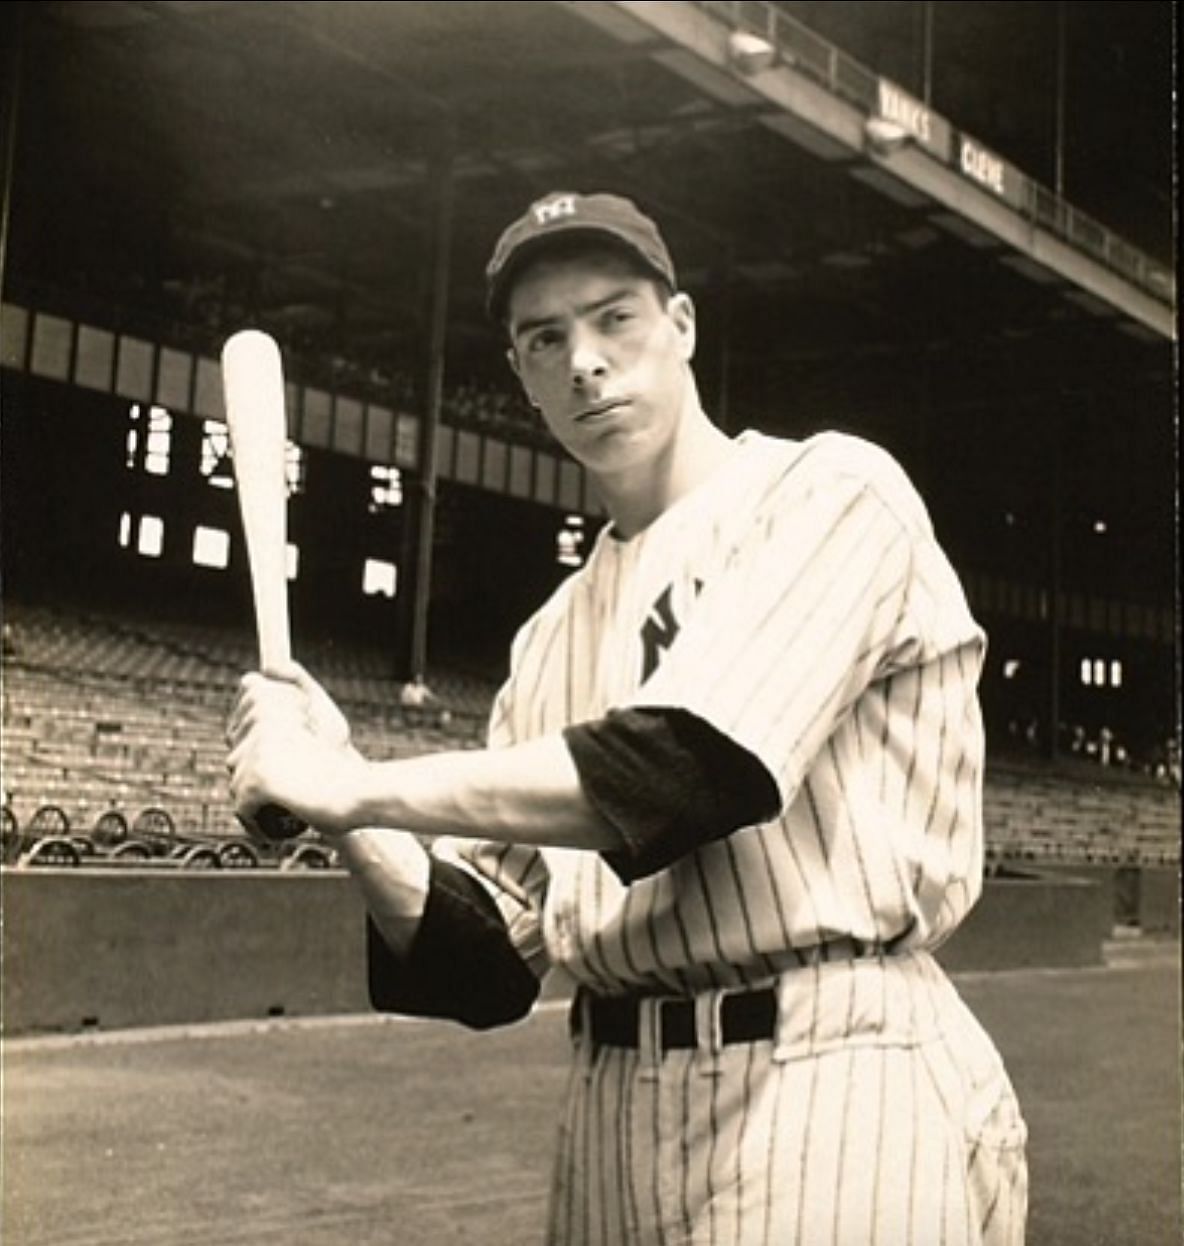 Joe DiMaggio of the New York Yankees (Photo source: @thejoedimaggio Instagram account)